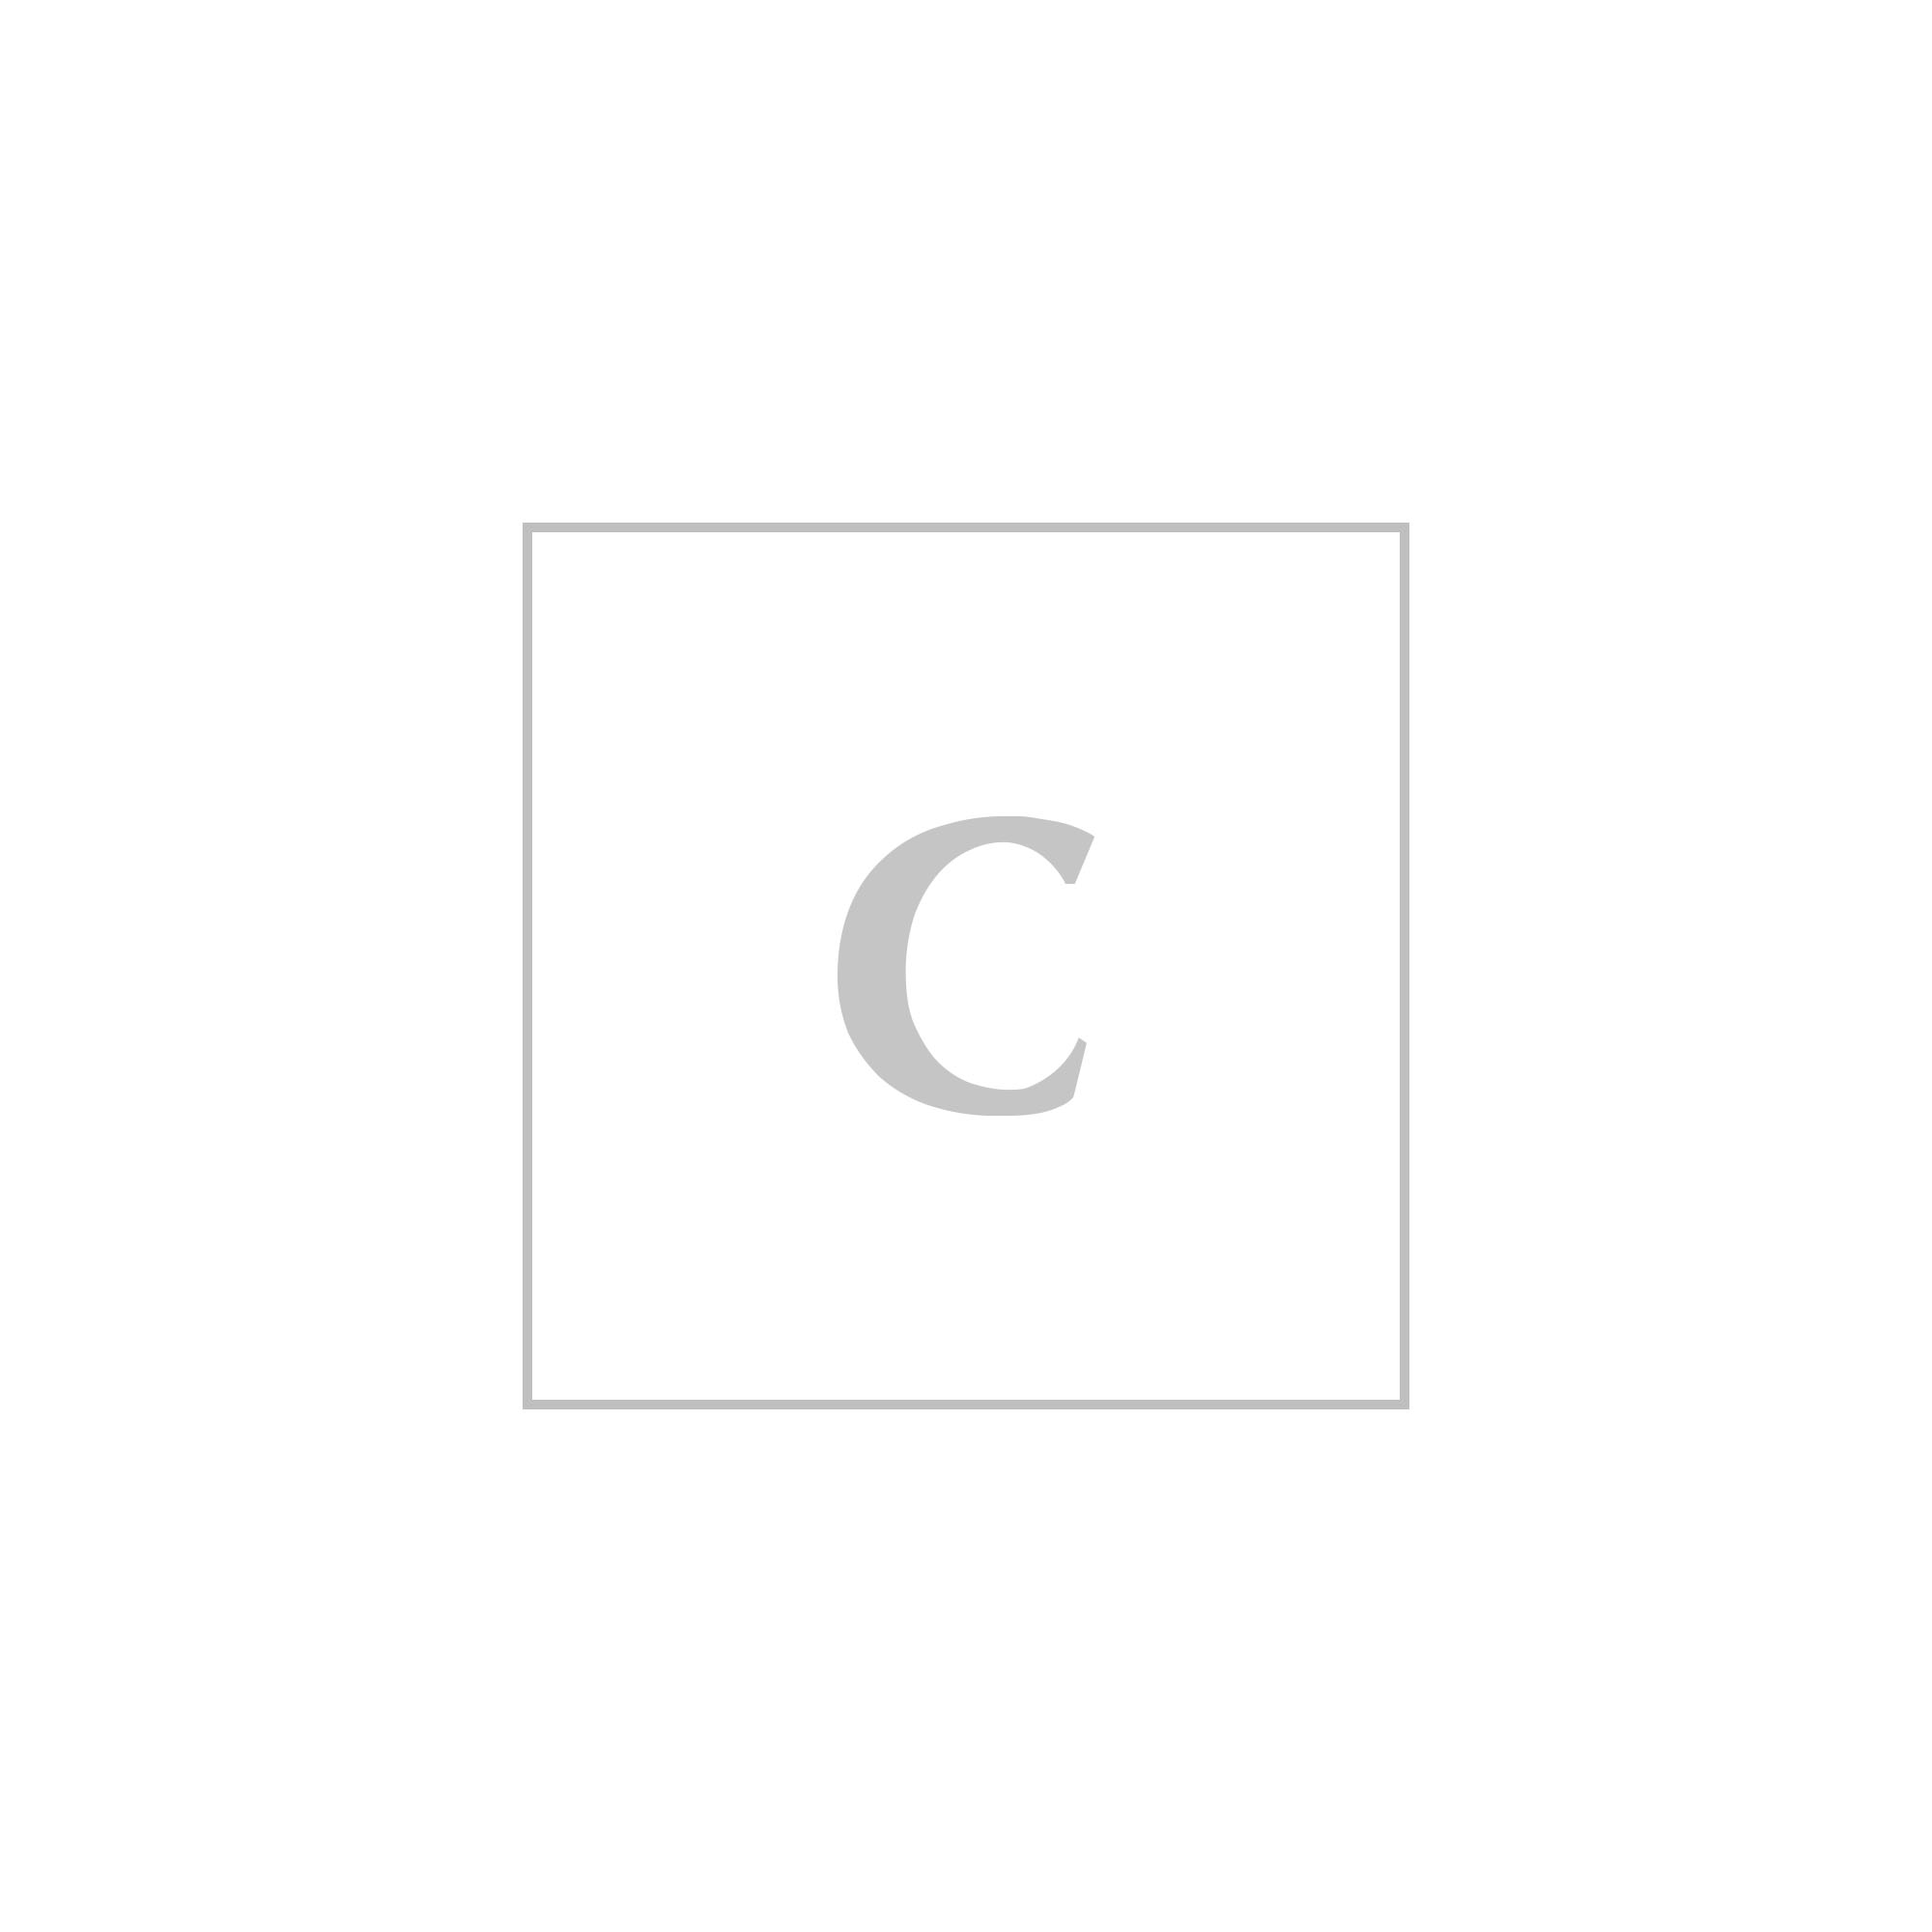 APC X CARHARTT JEANS WITH LOGO ON BACK,201629DJE000001-IAL